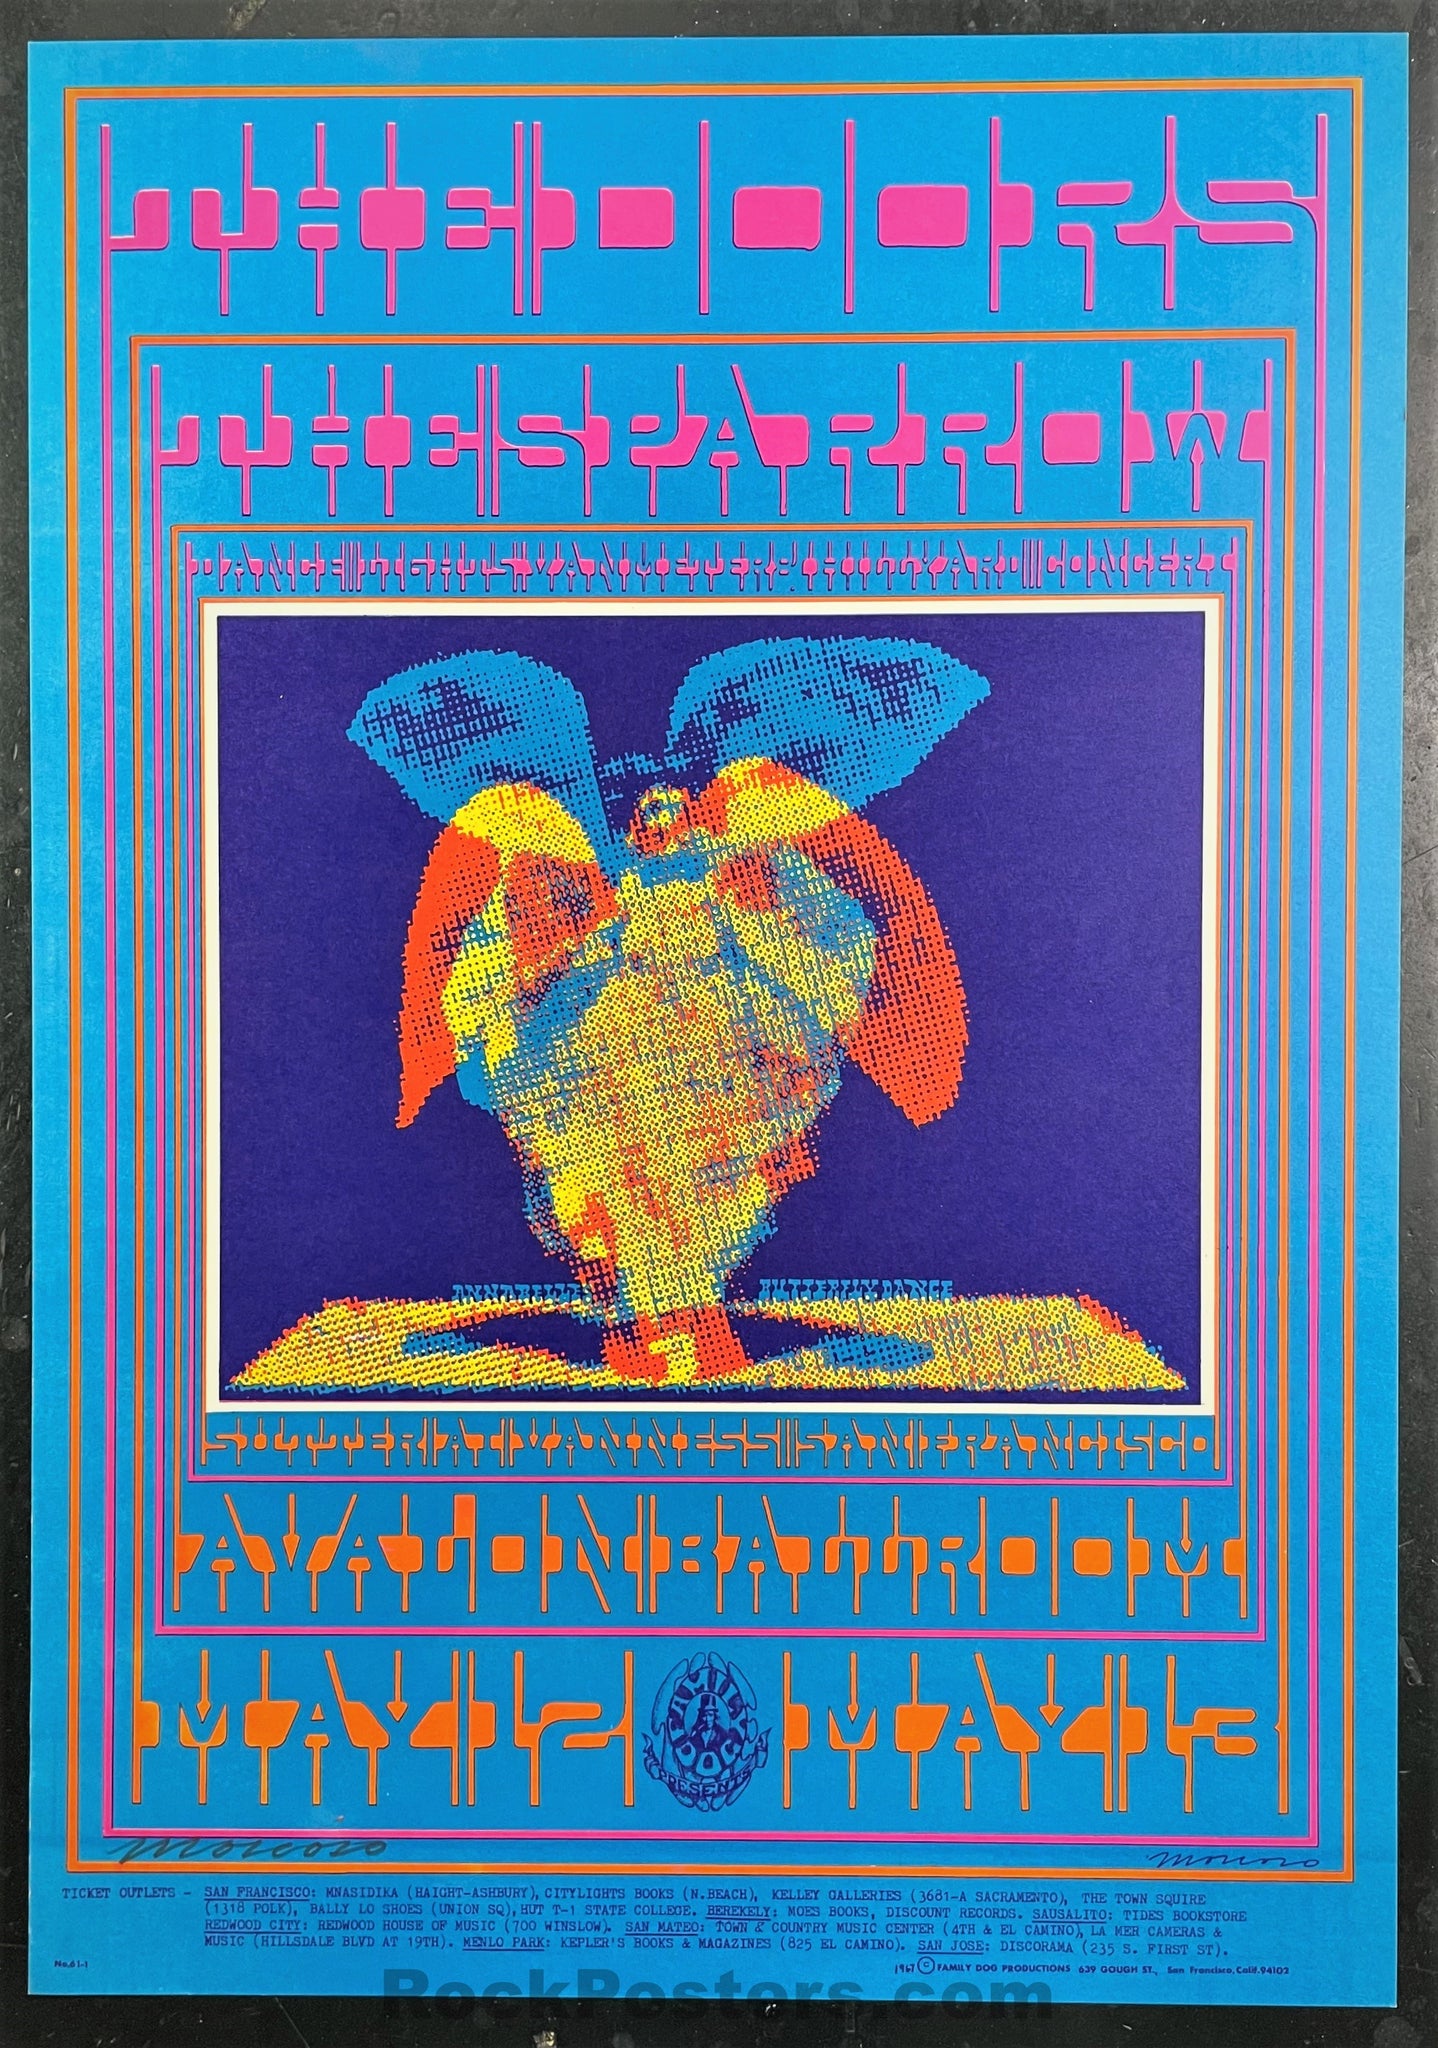 AUCTION - FD-61 - Doors Sparrow - Moscoso Signed - 1967 Poster - Avalon Ballroom - Near Mint